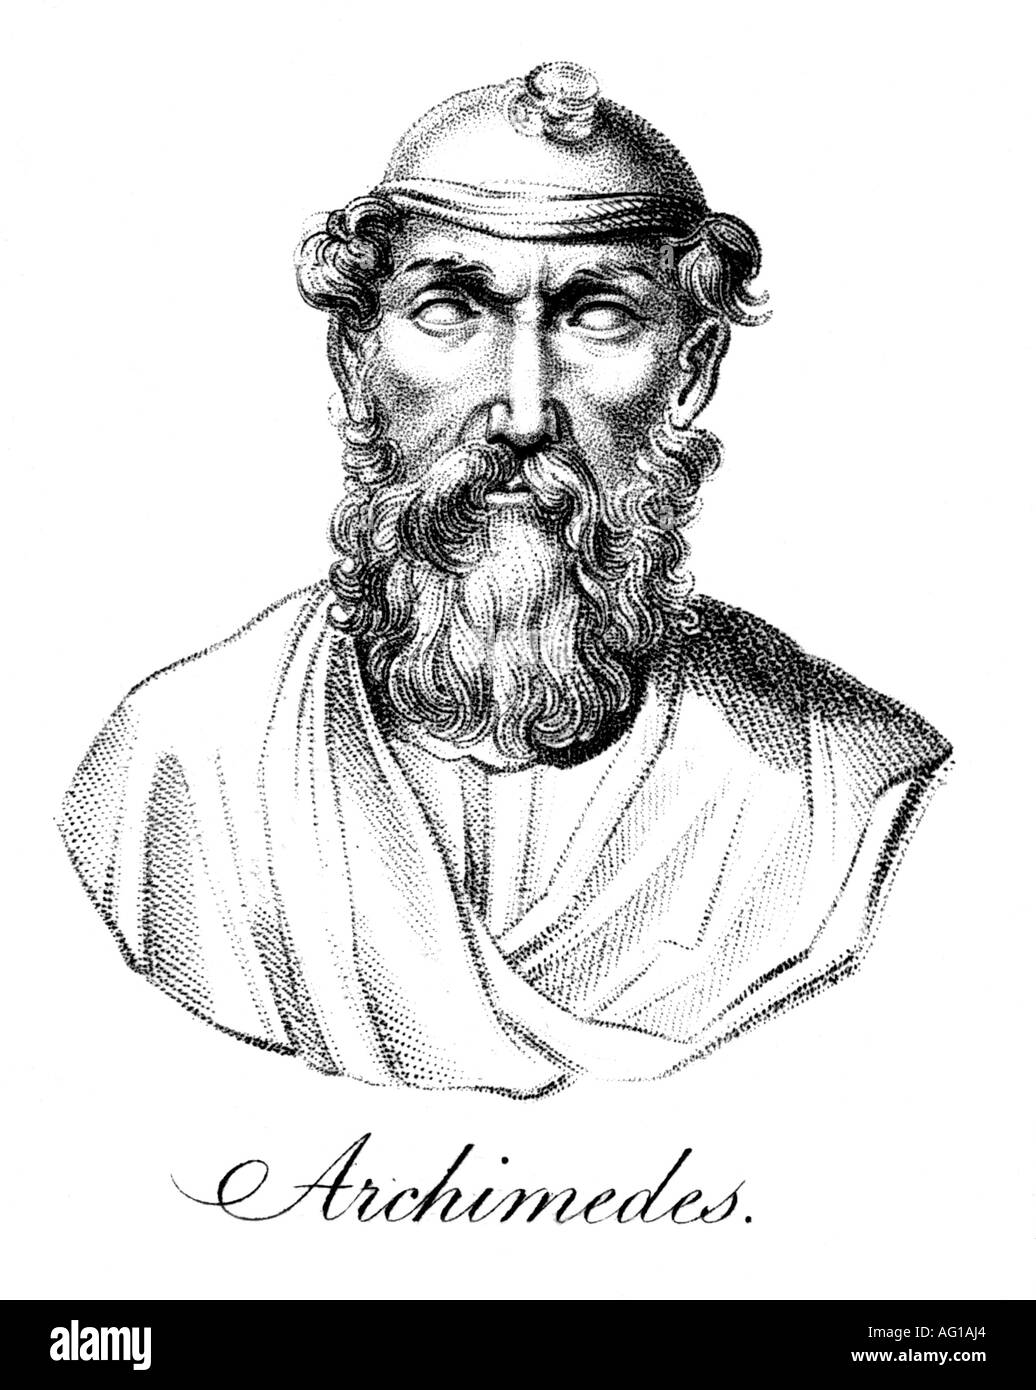 Archimedes by gryphongrl on DeviantArt